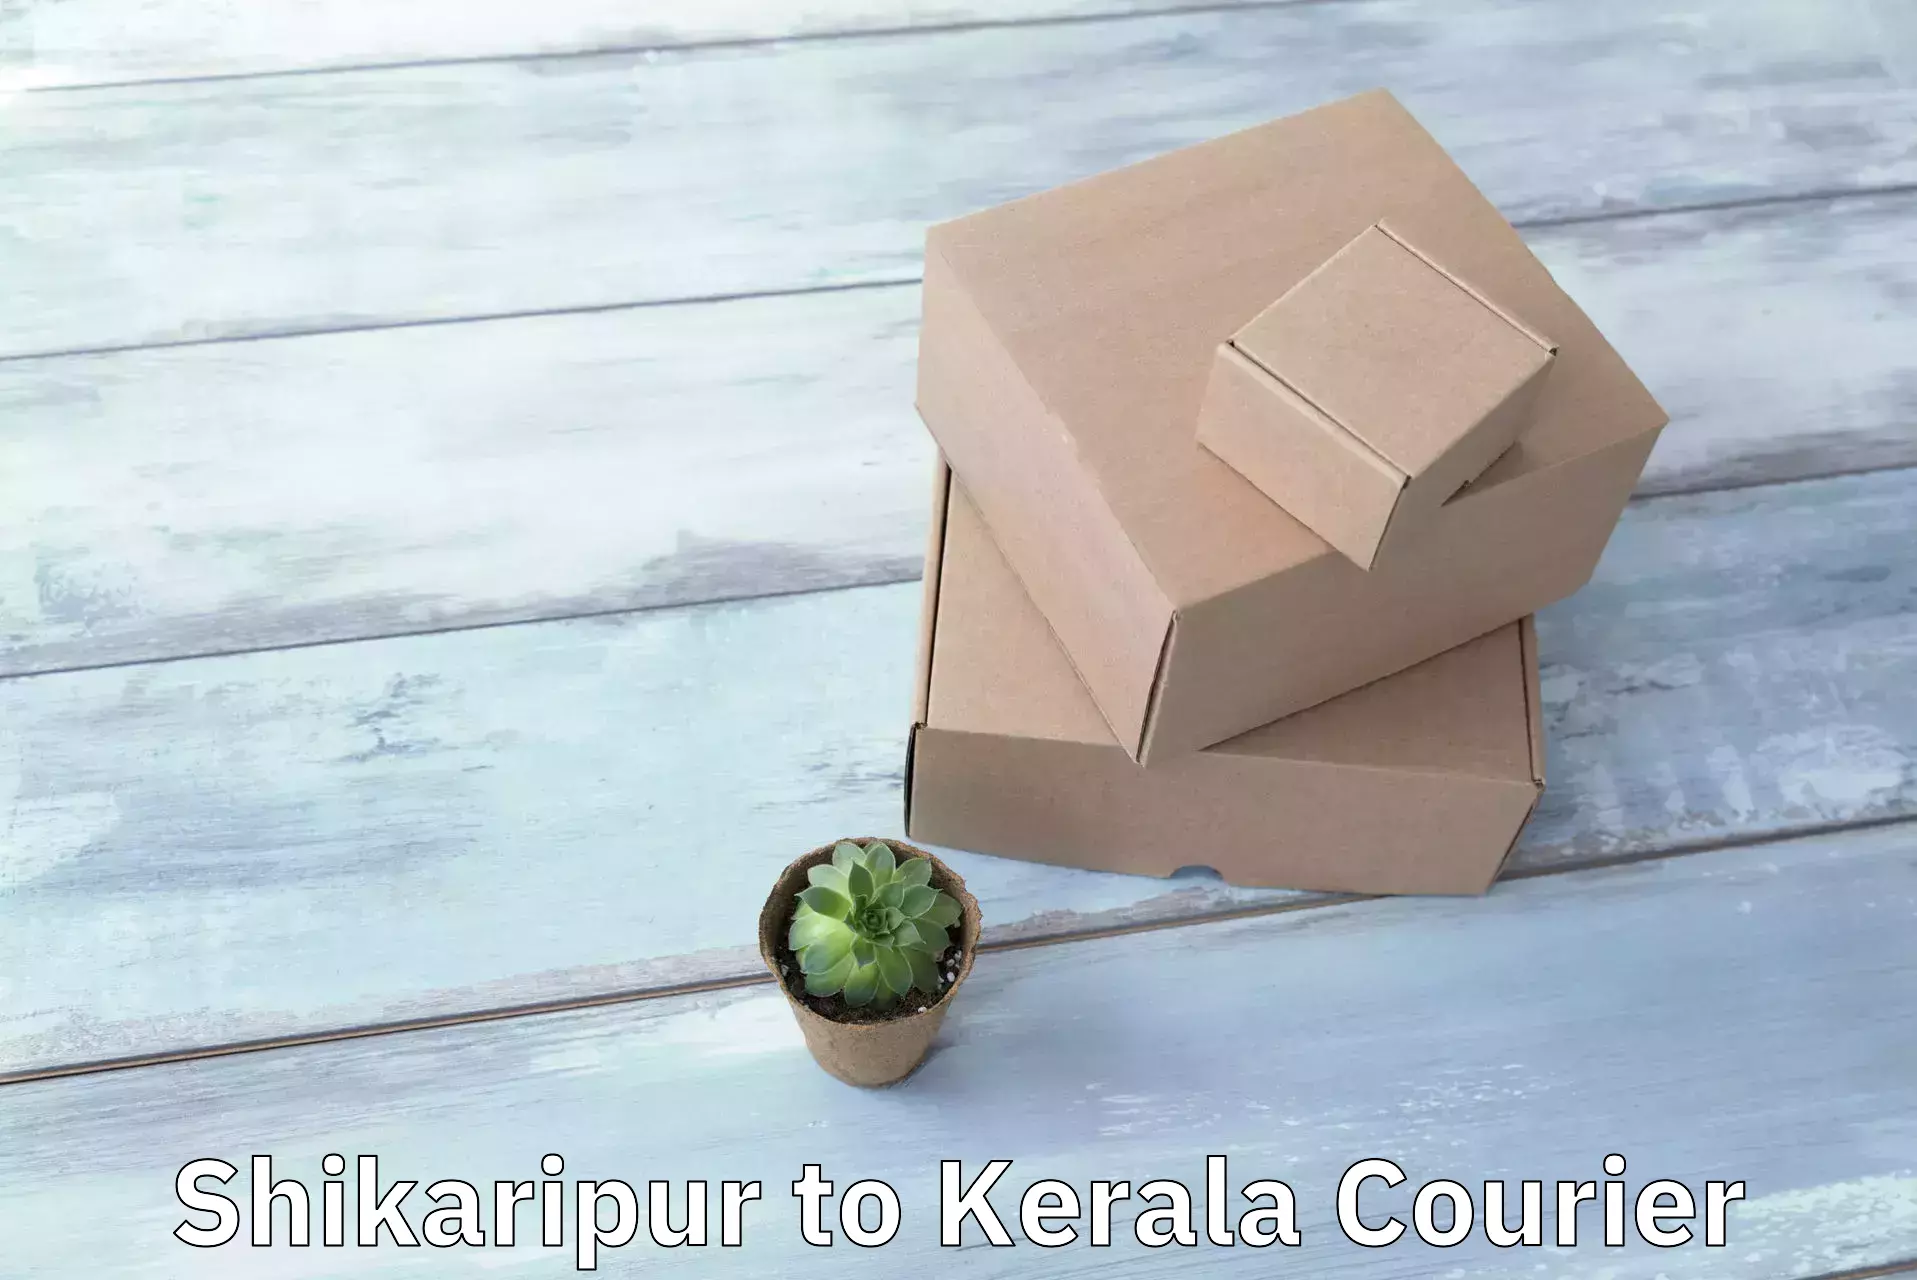 High-capacity shipping options Shikaripur to Kerala